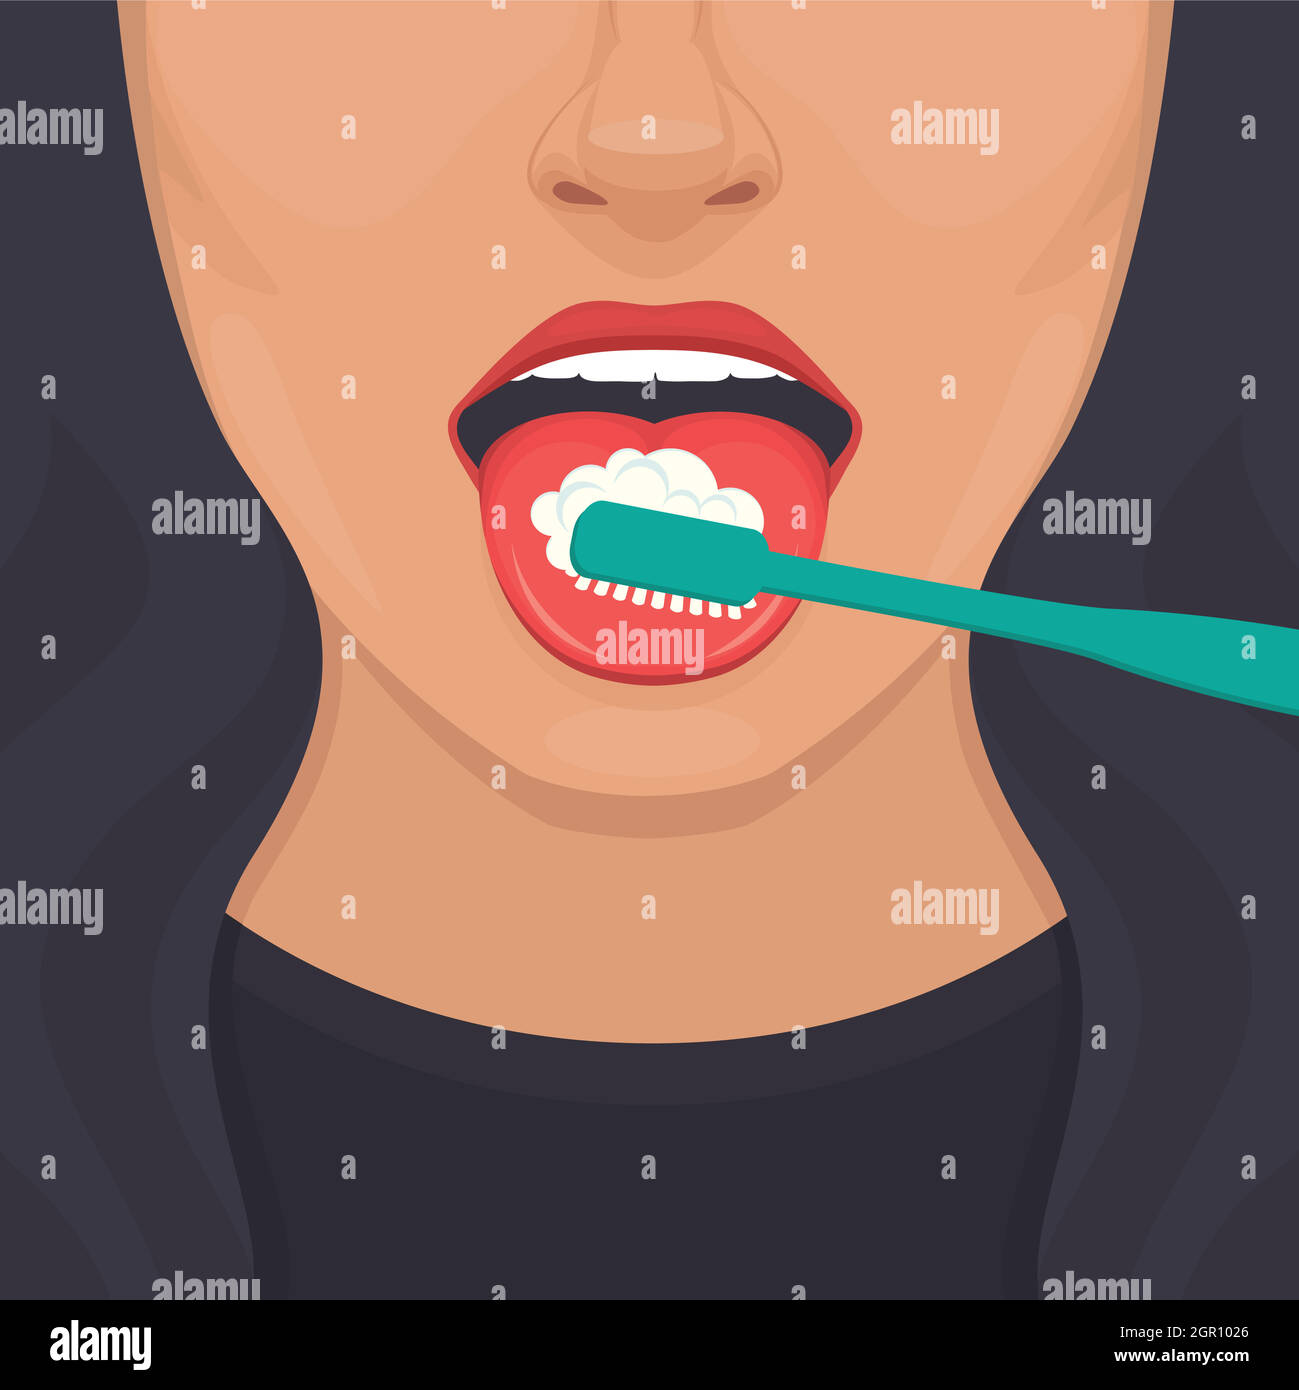 tongue hygiene, brush and toothbrush Stock Vector